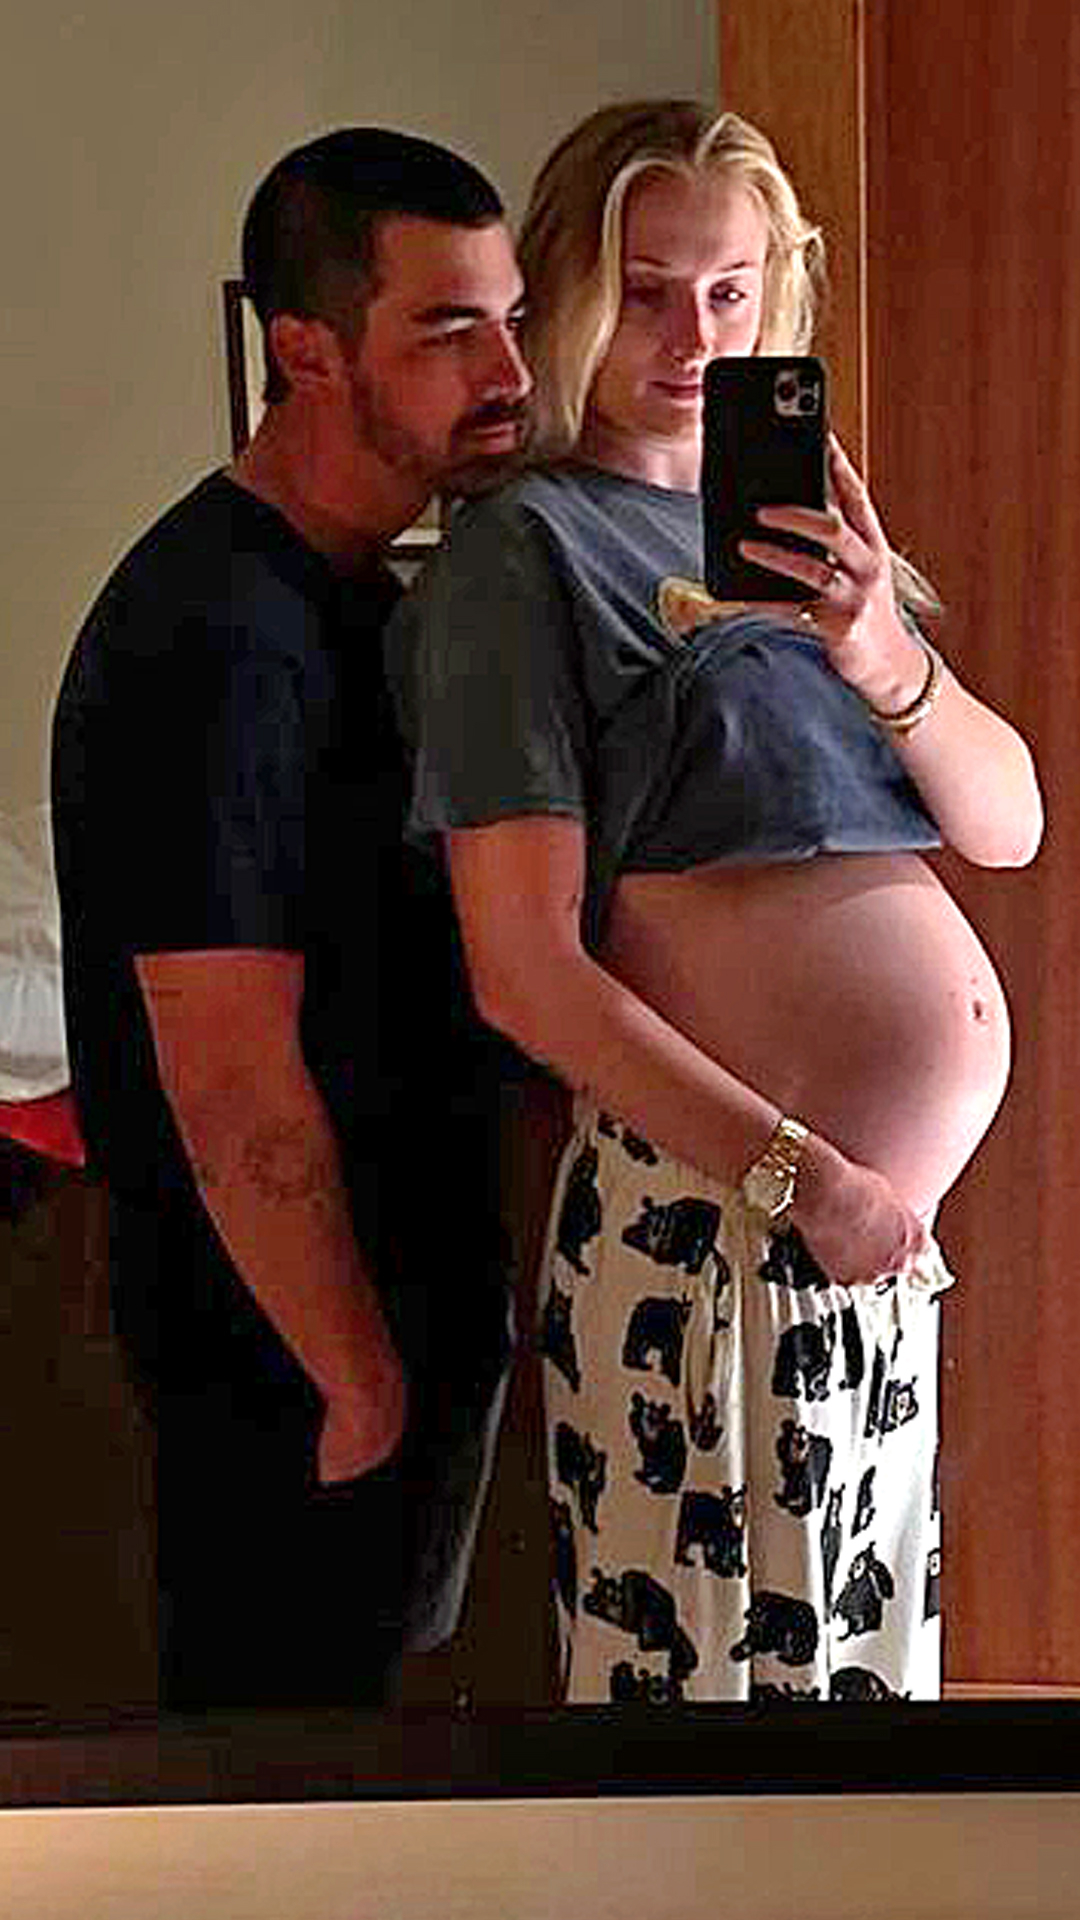 Pregnant Sophie Turner flaunts baby bump on walk with Joe Jonas